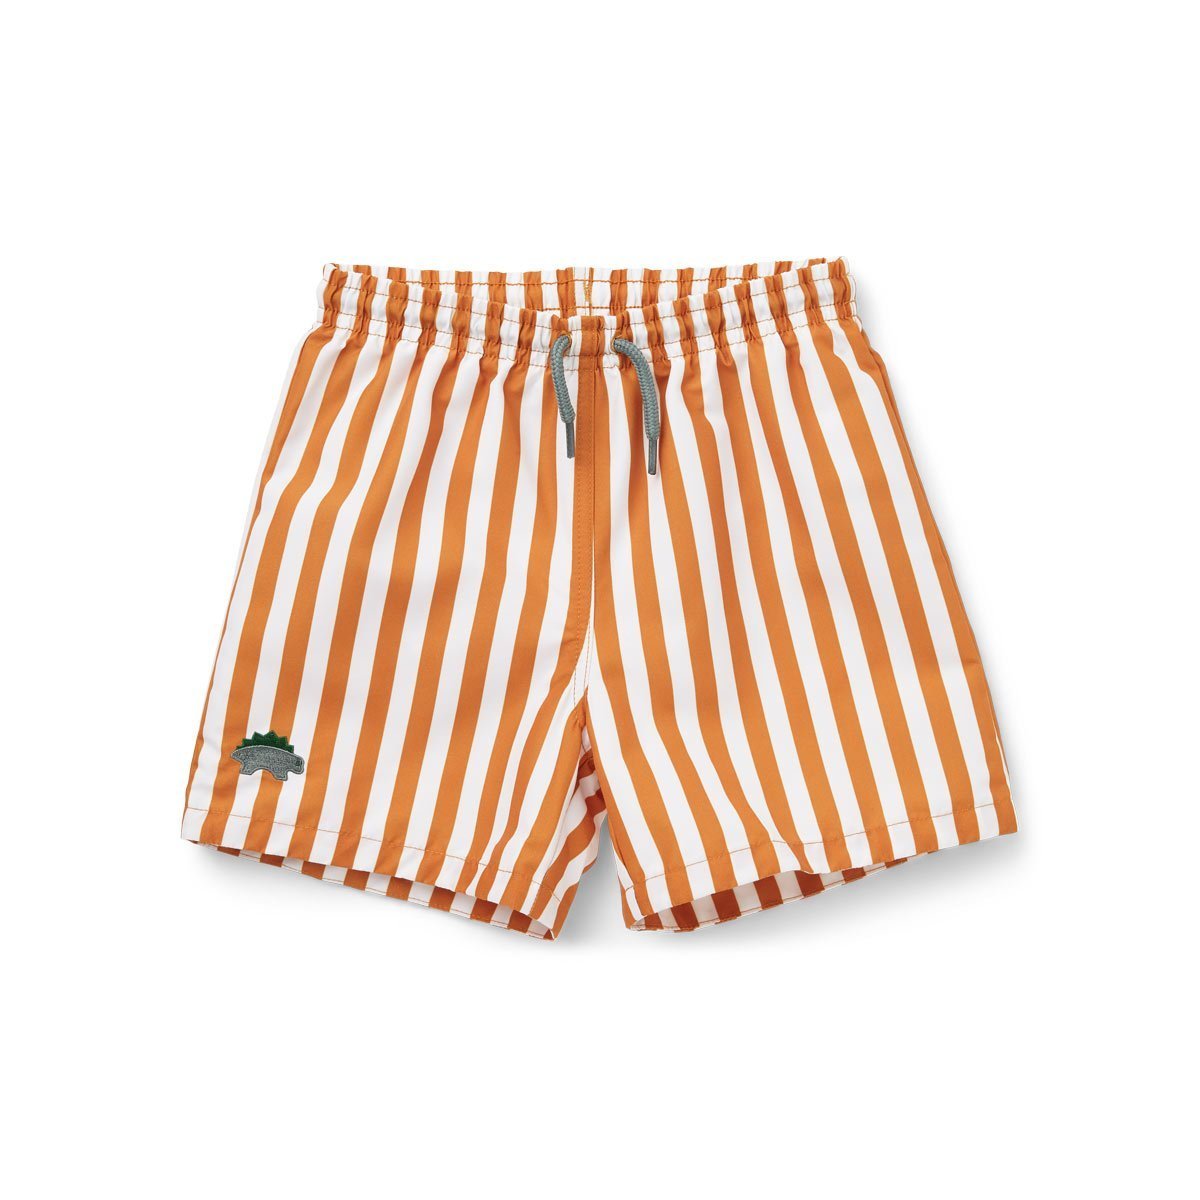 Liewood Duke Board Shorts in Stripe - Mustard/White - Scandibørn